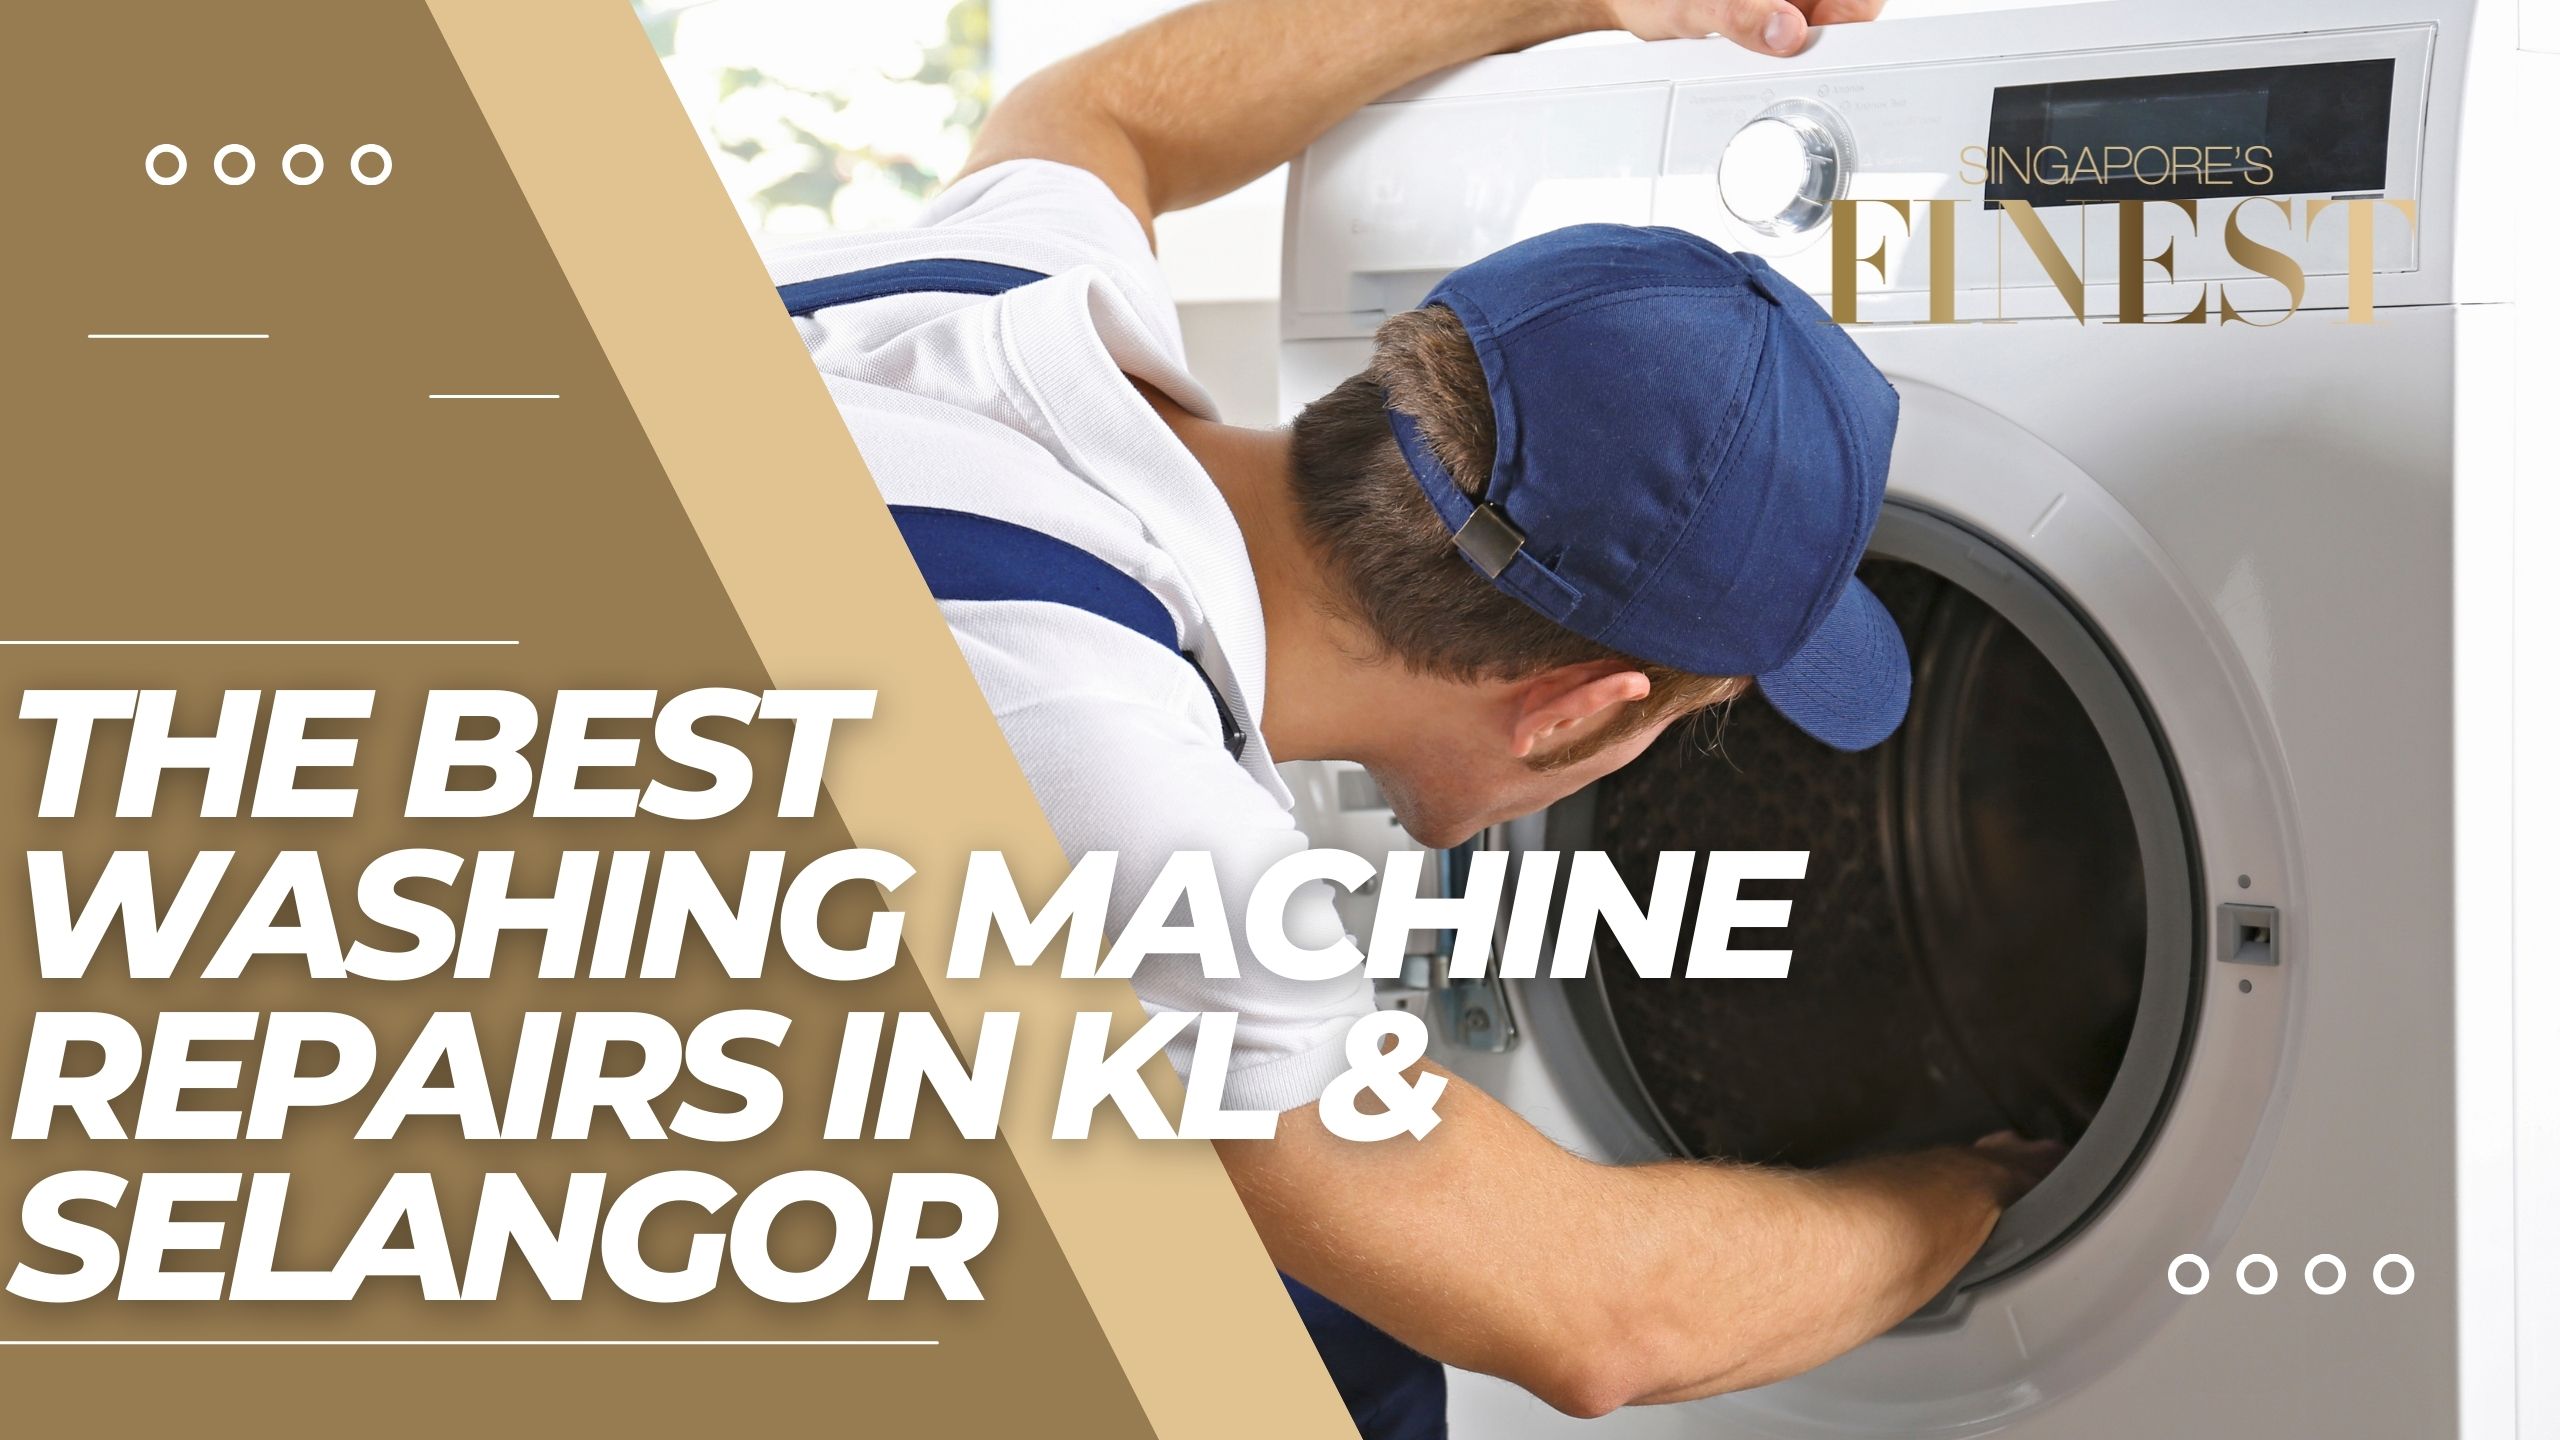 The Finest Washing Machine Repairs in KL & Selangor